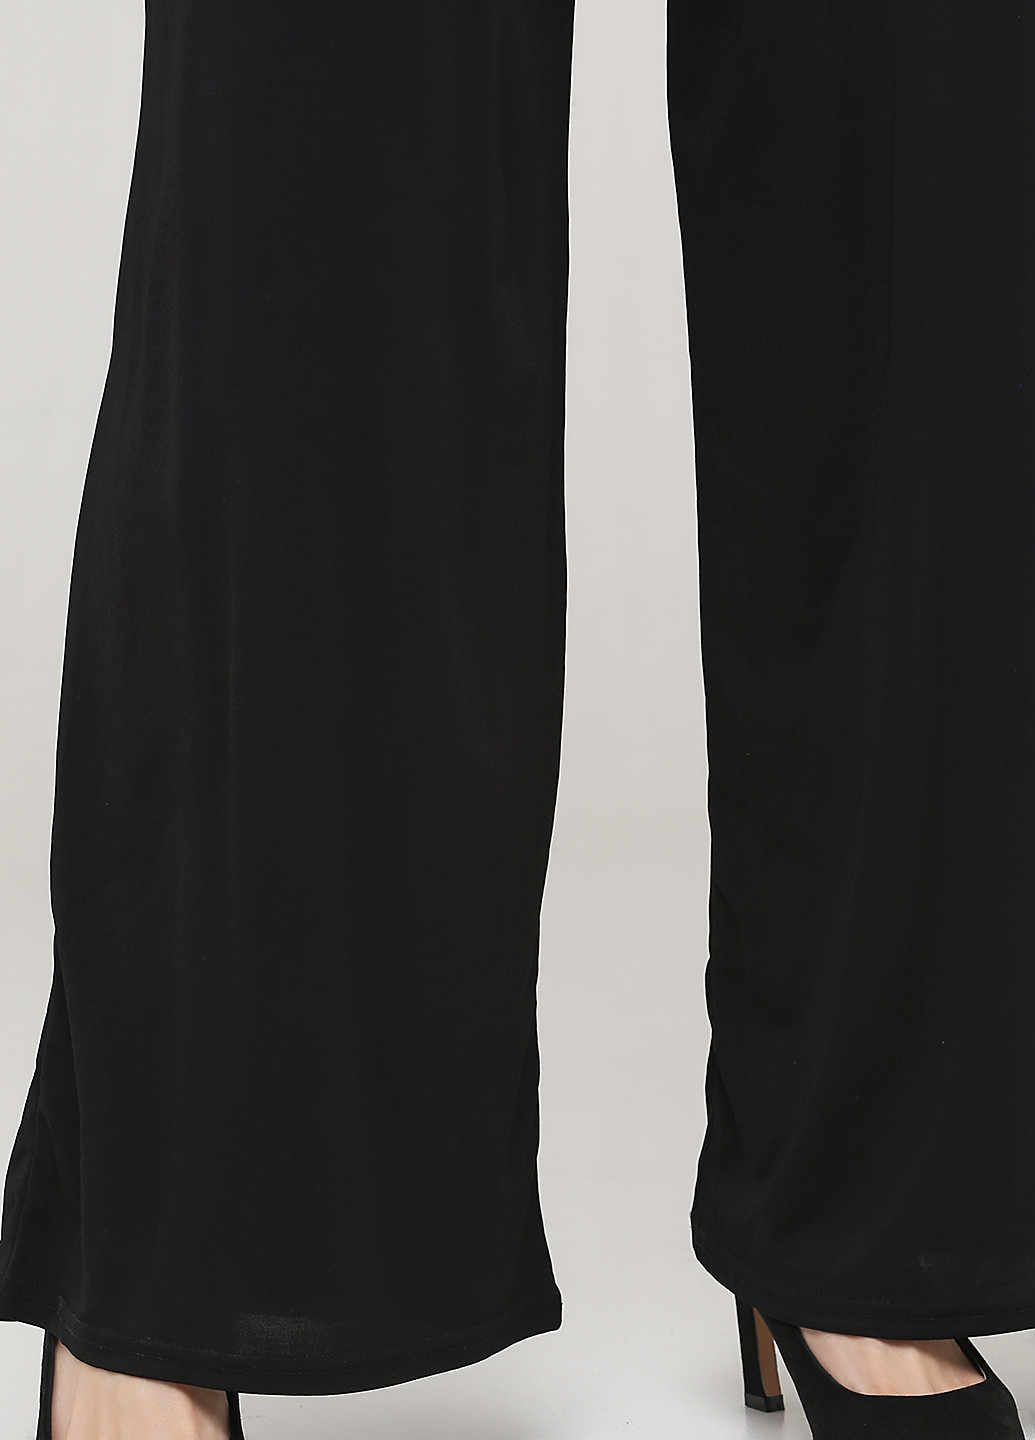 Комбинезон Lipsy комбинезон-брюки однотонный чёрный вечерний полиэстер